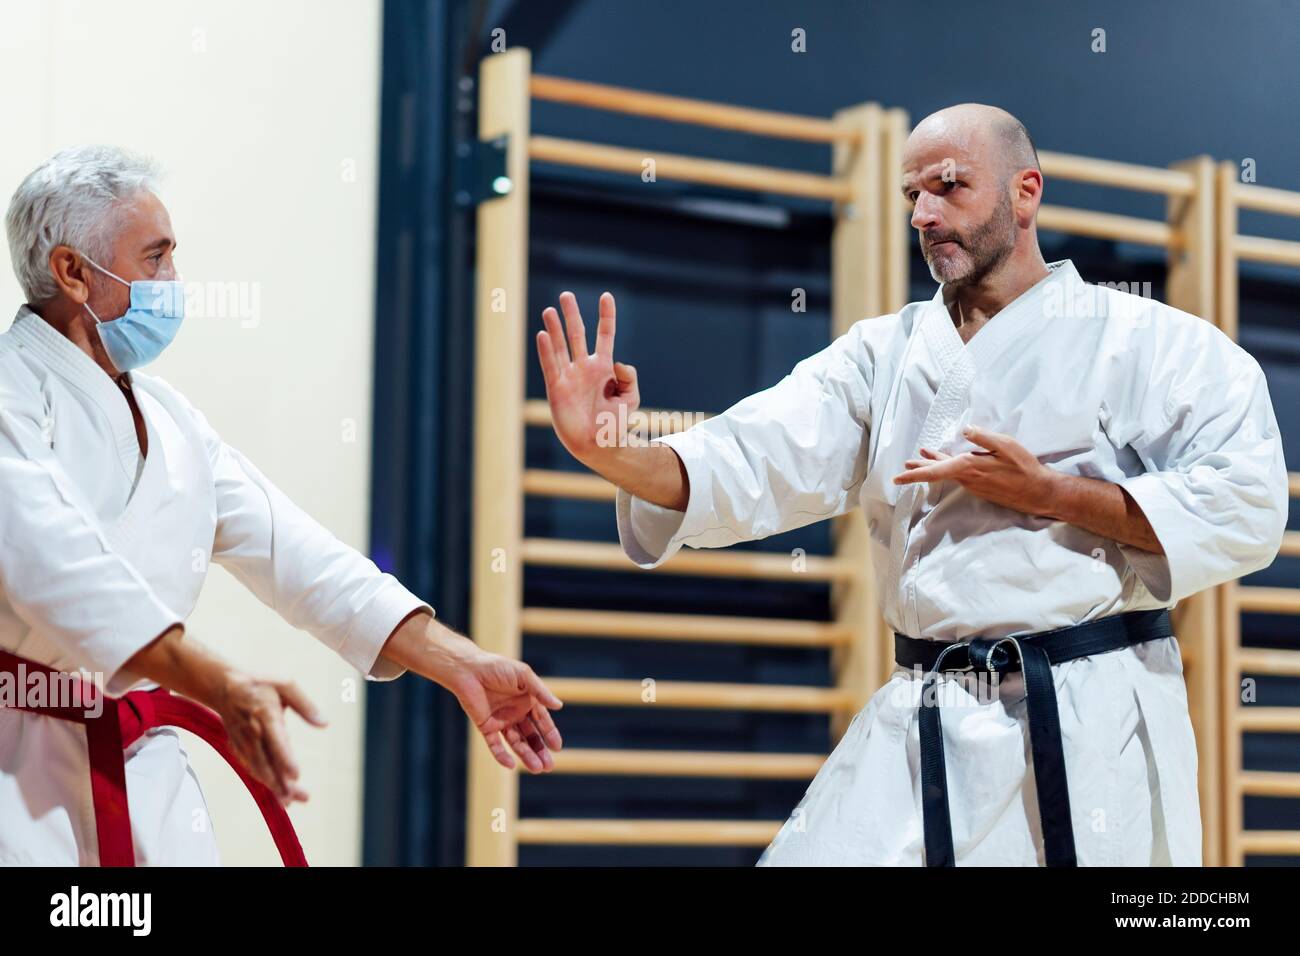 Kali Escrima Martial Arts Instructor Stock Photo - Image of male, arts:  51950638